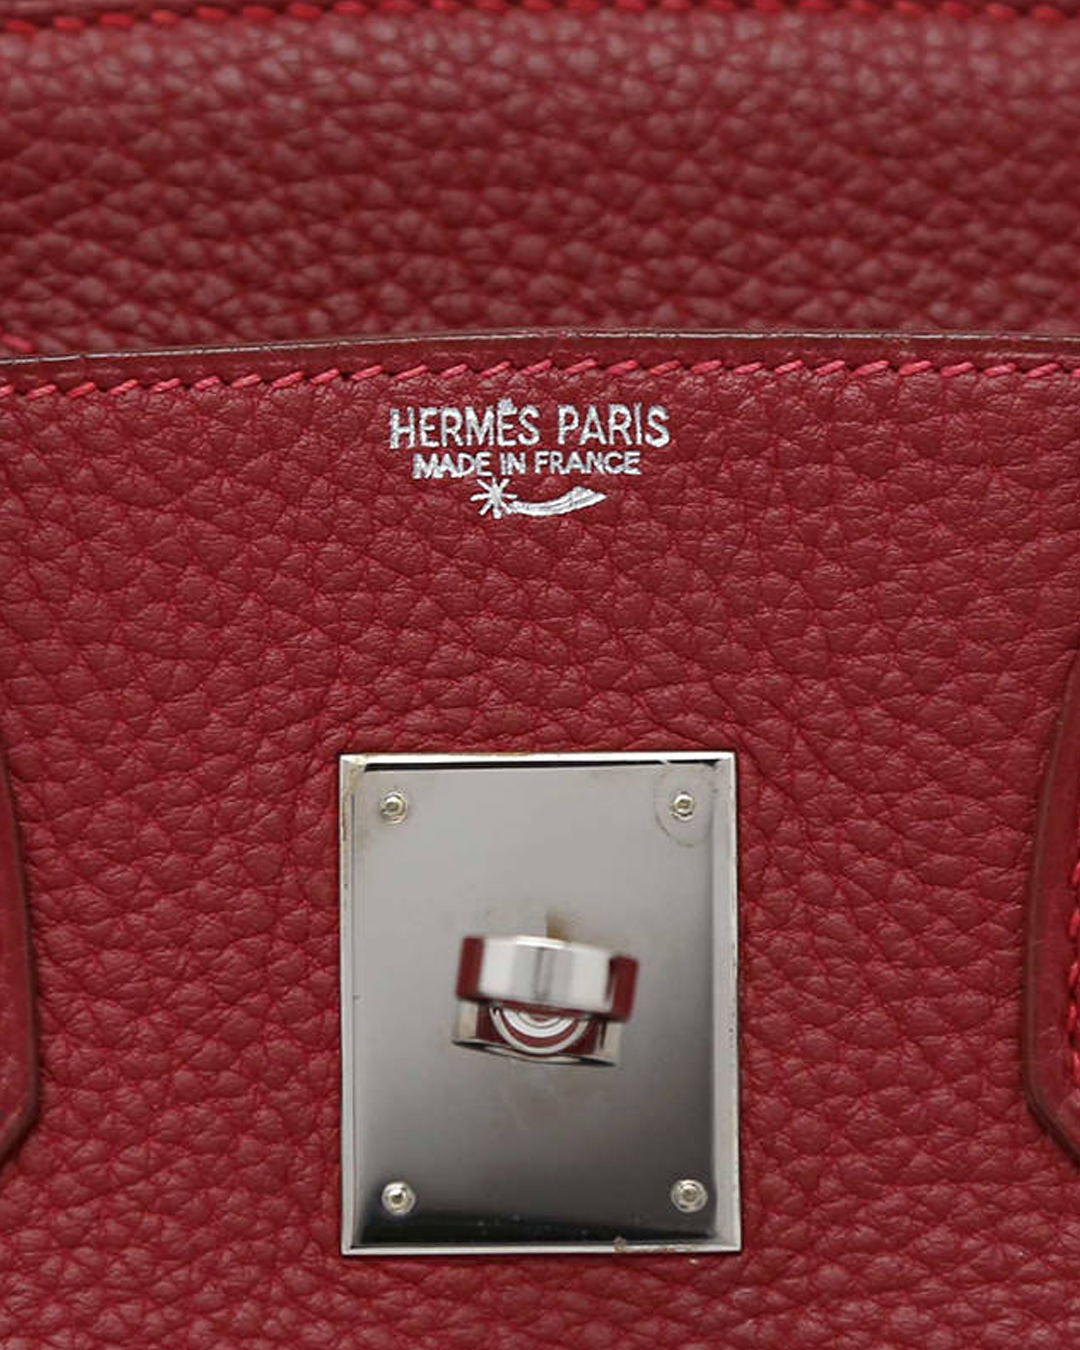 Hermès simbolo segreto stella cadente craftsman